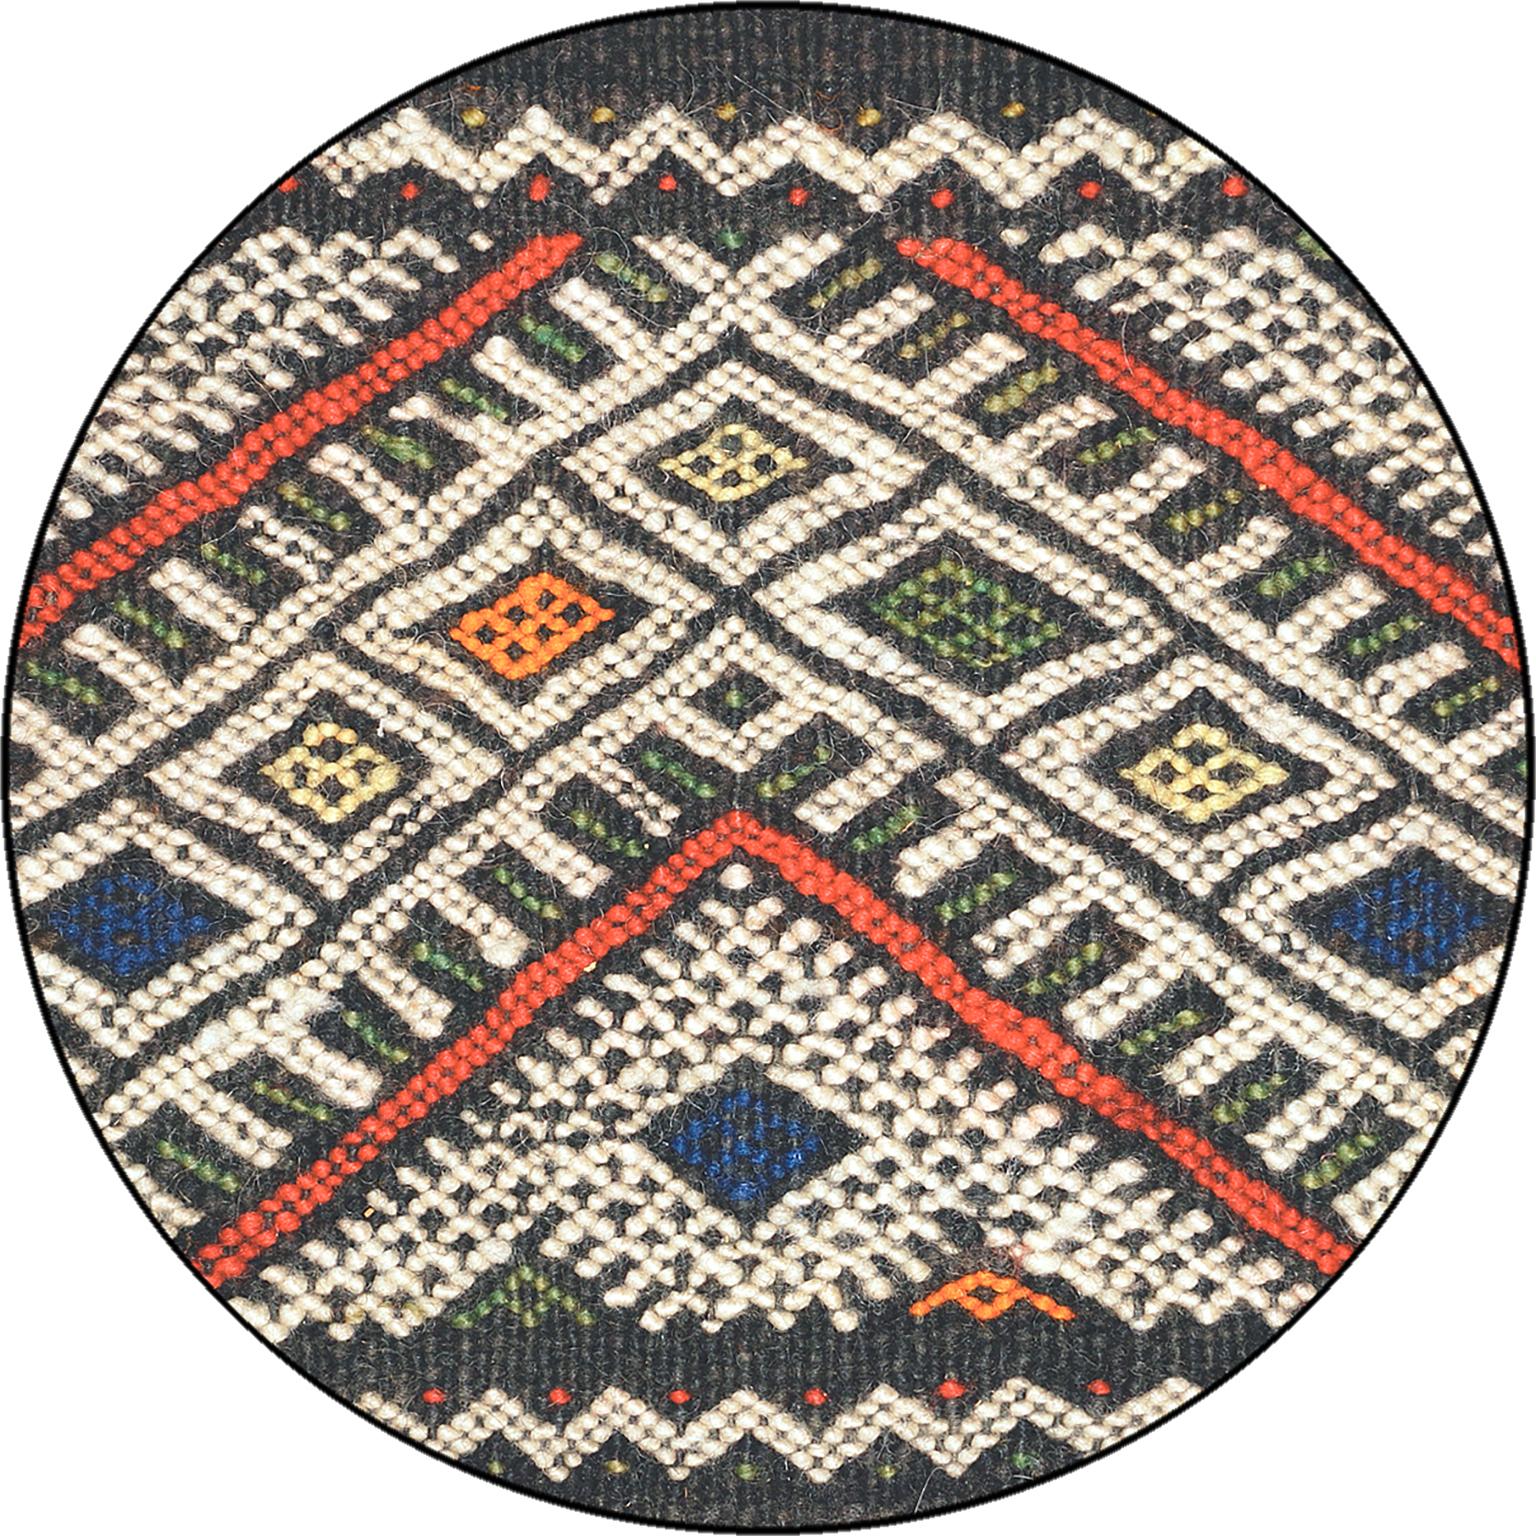 Mid-20th century Moroccan Zaiane carpet
Morocco circa 1940
Handwoven.